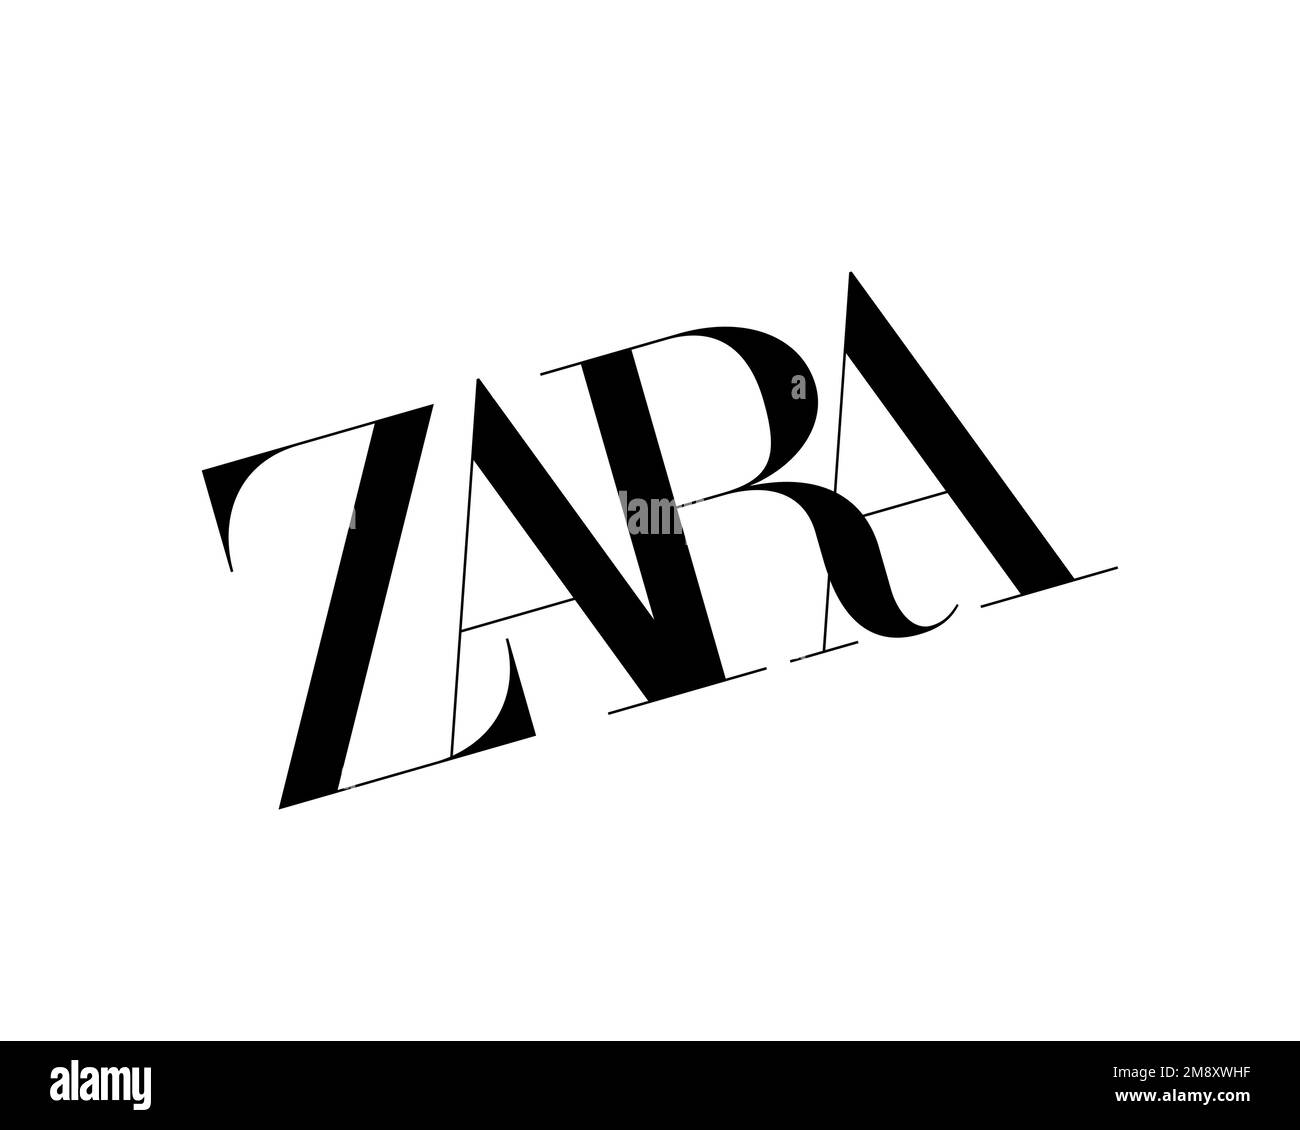 Zara Retail, er Zara Retail, er, logo pivoté, fond blanc Banque D'Images